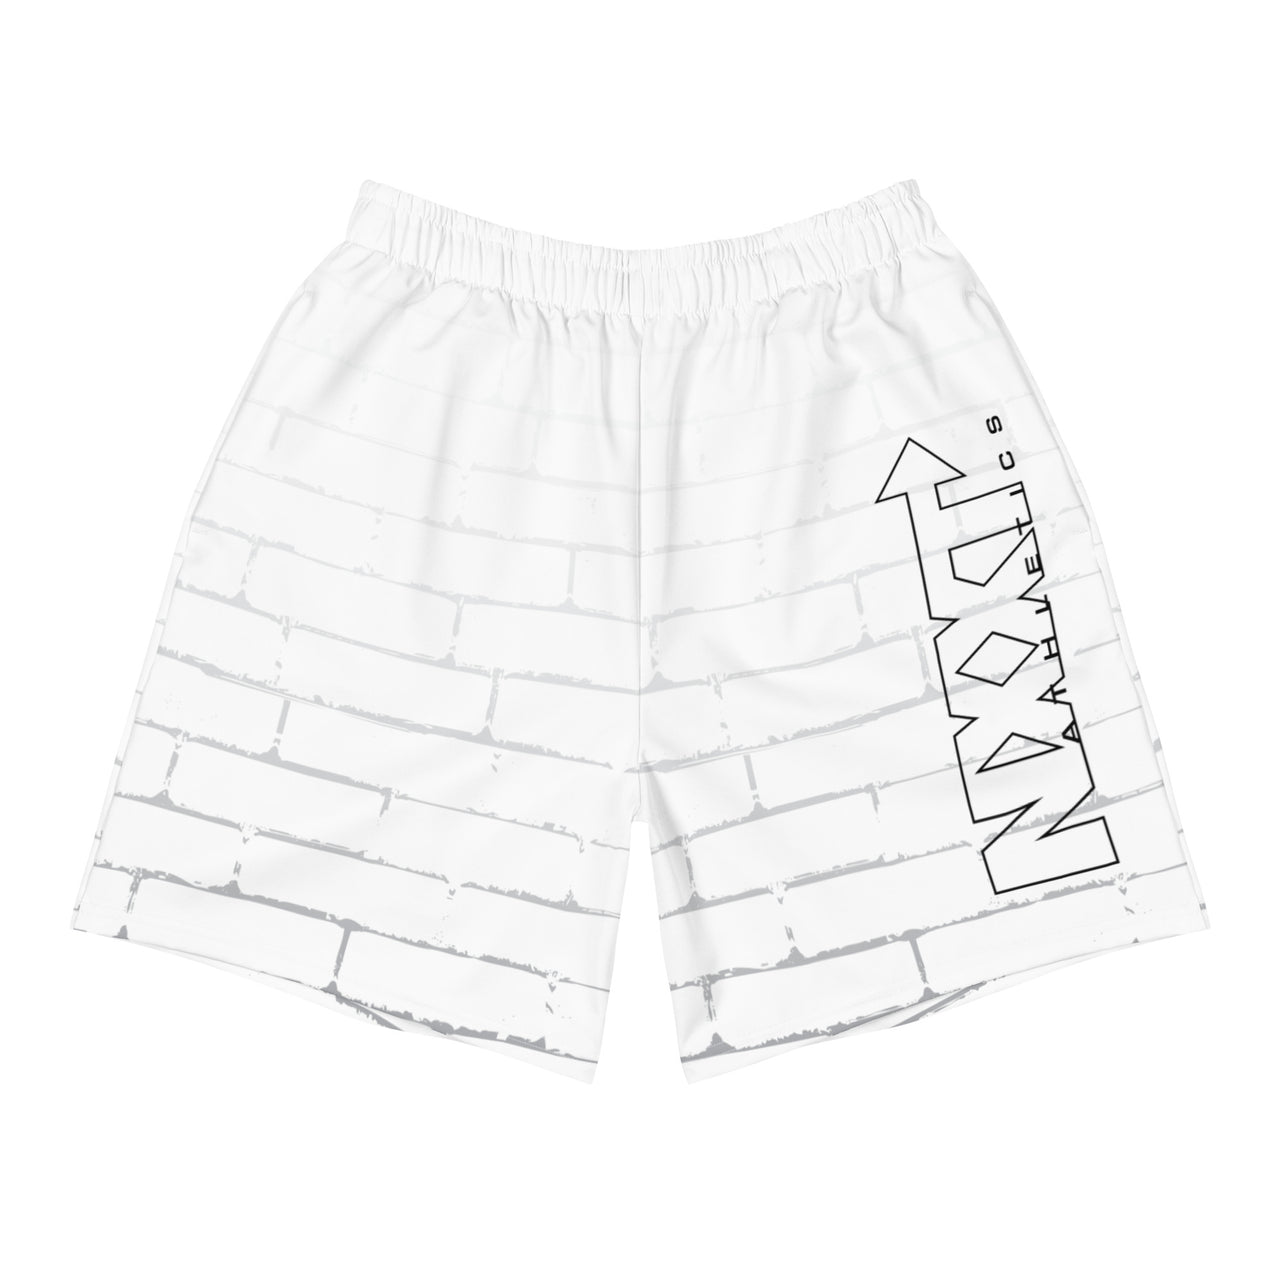 NXXT Athletics Recycled Men's Athletic Shorts - White/Black - Shady Lion Coffee Co.